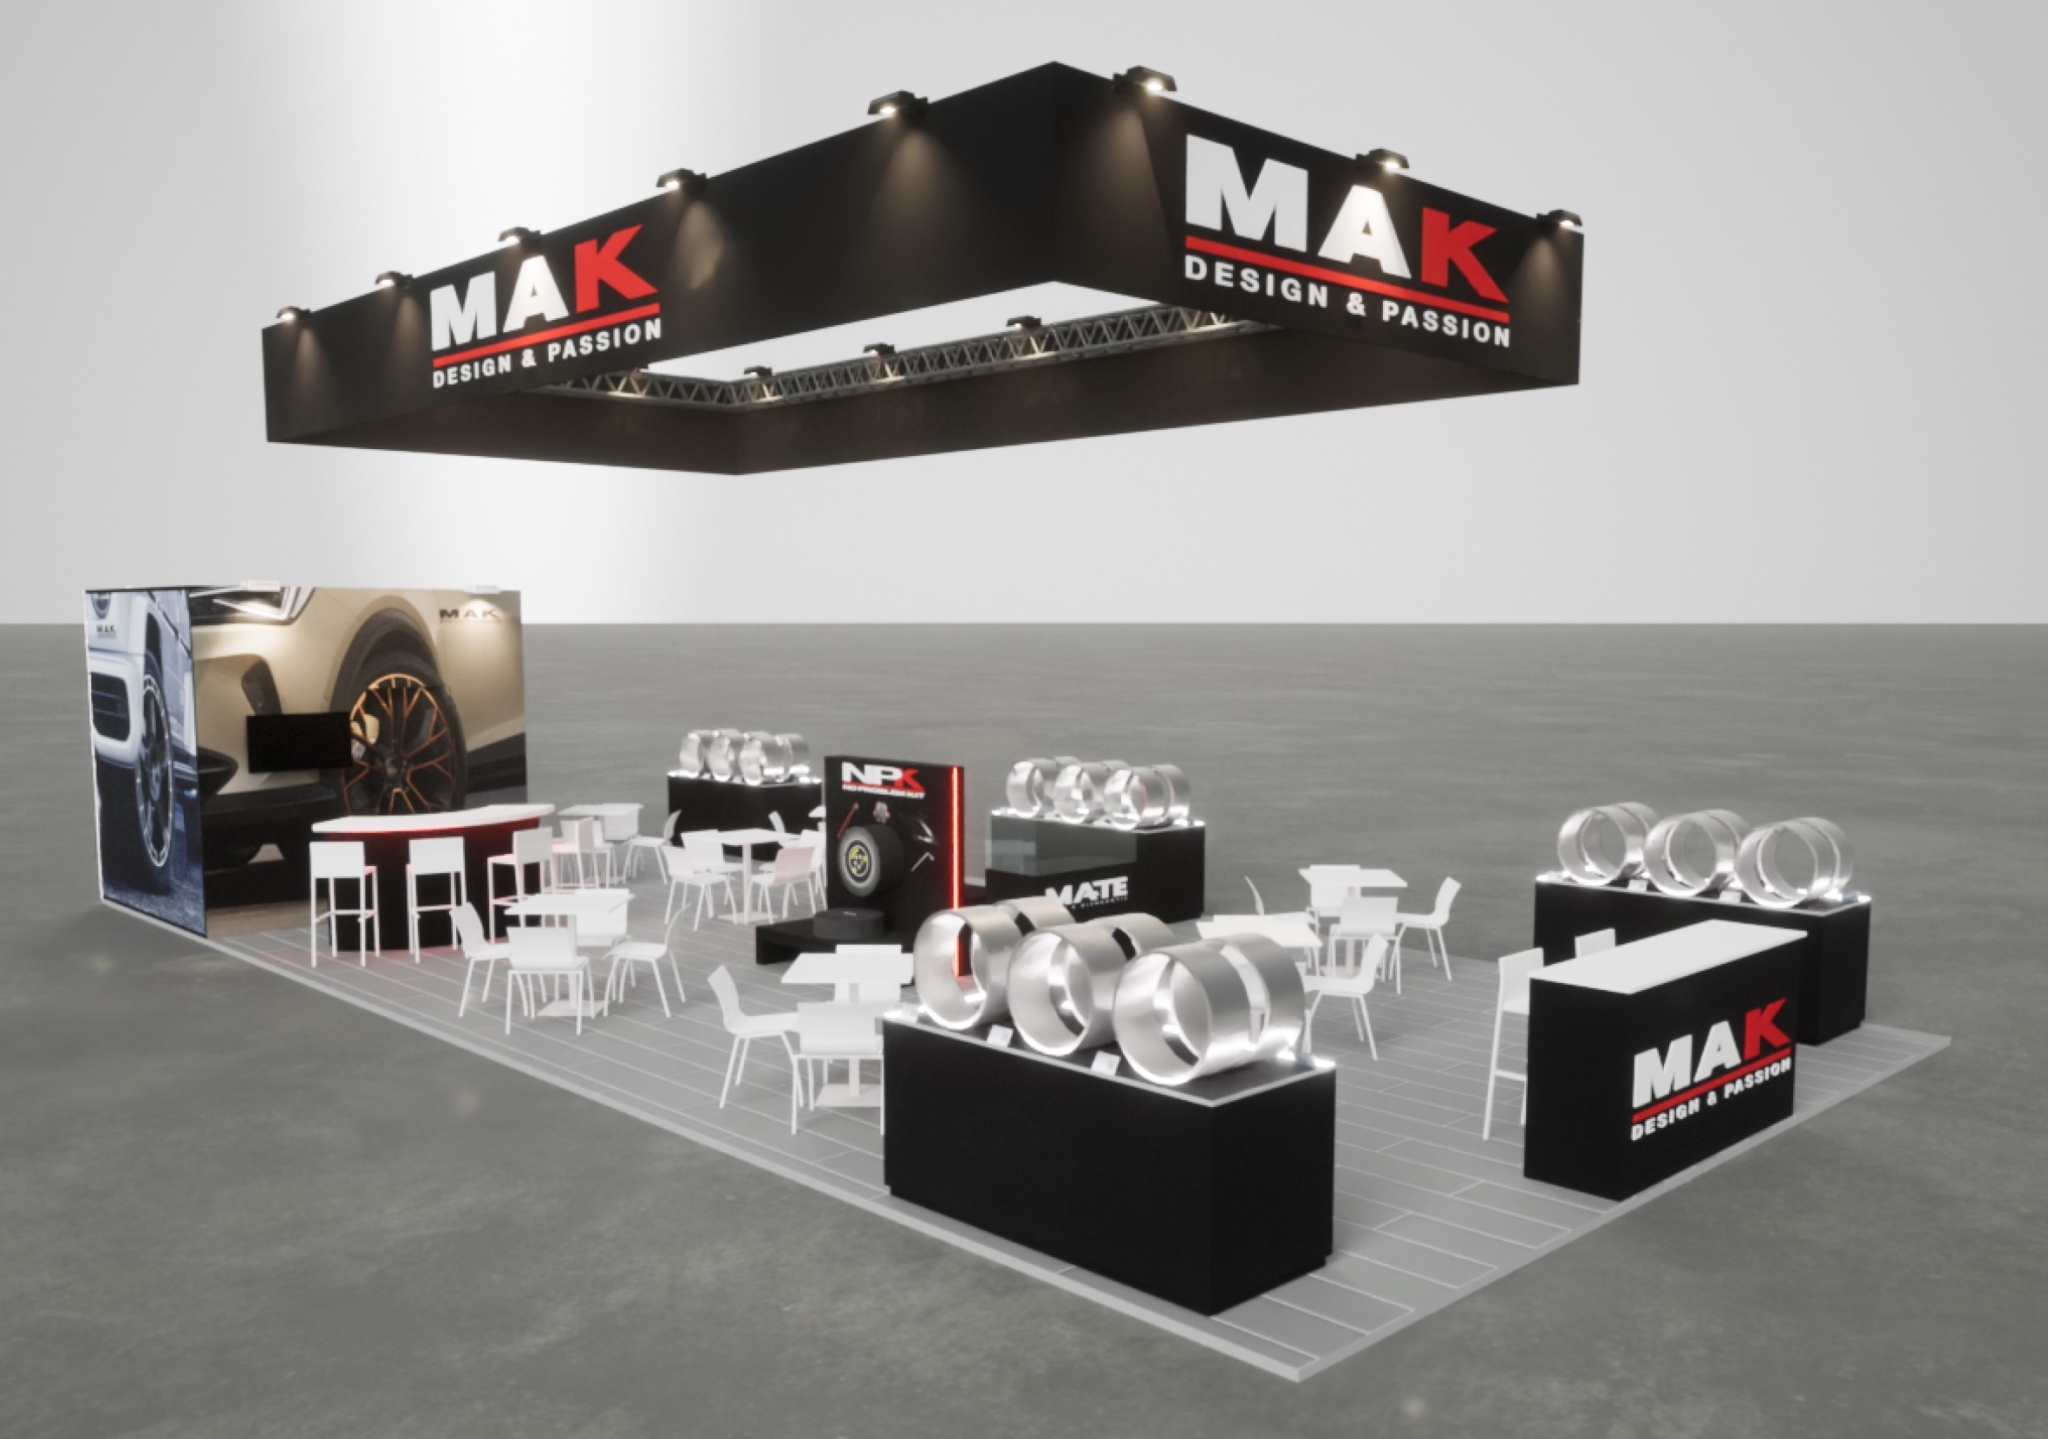 MAK spotlights innovations at Tire Cologne